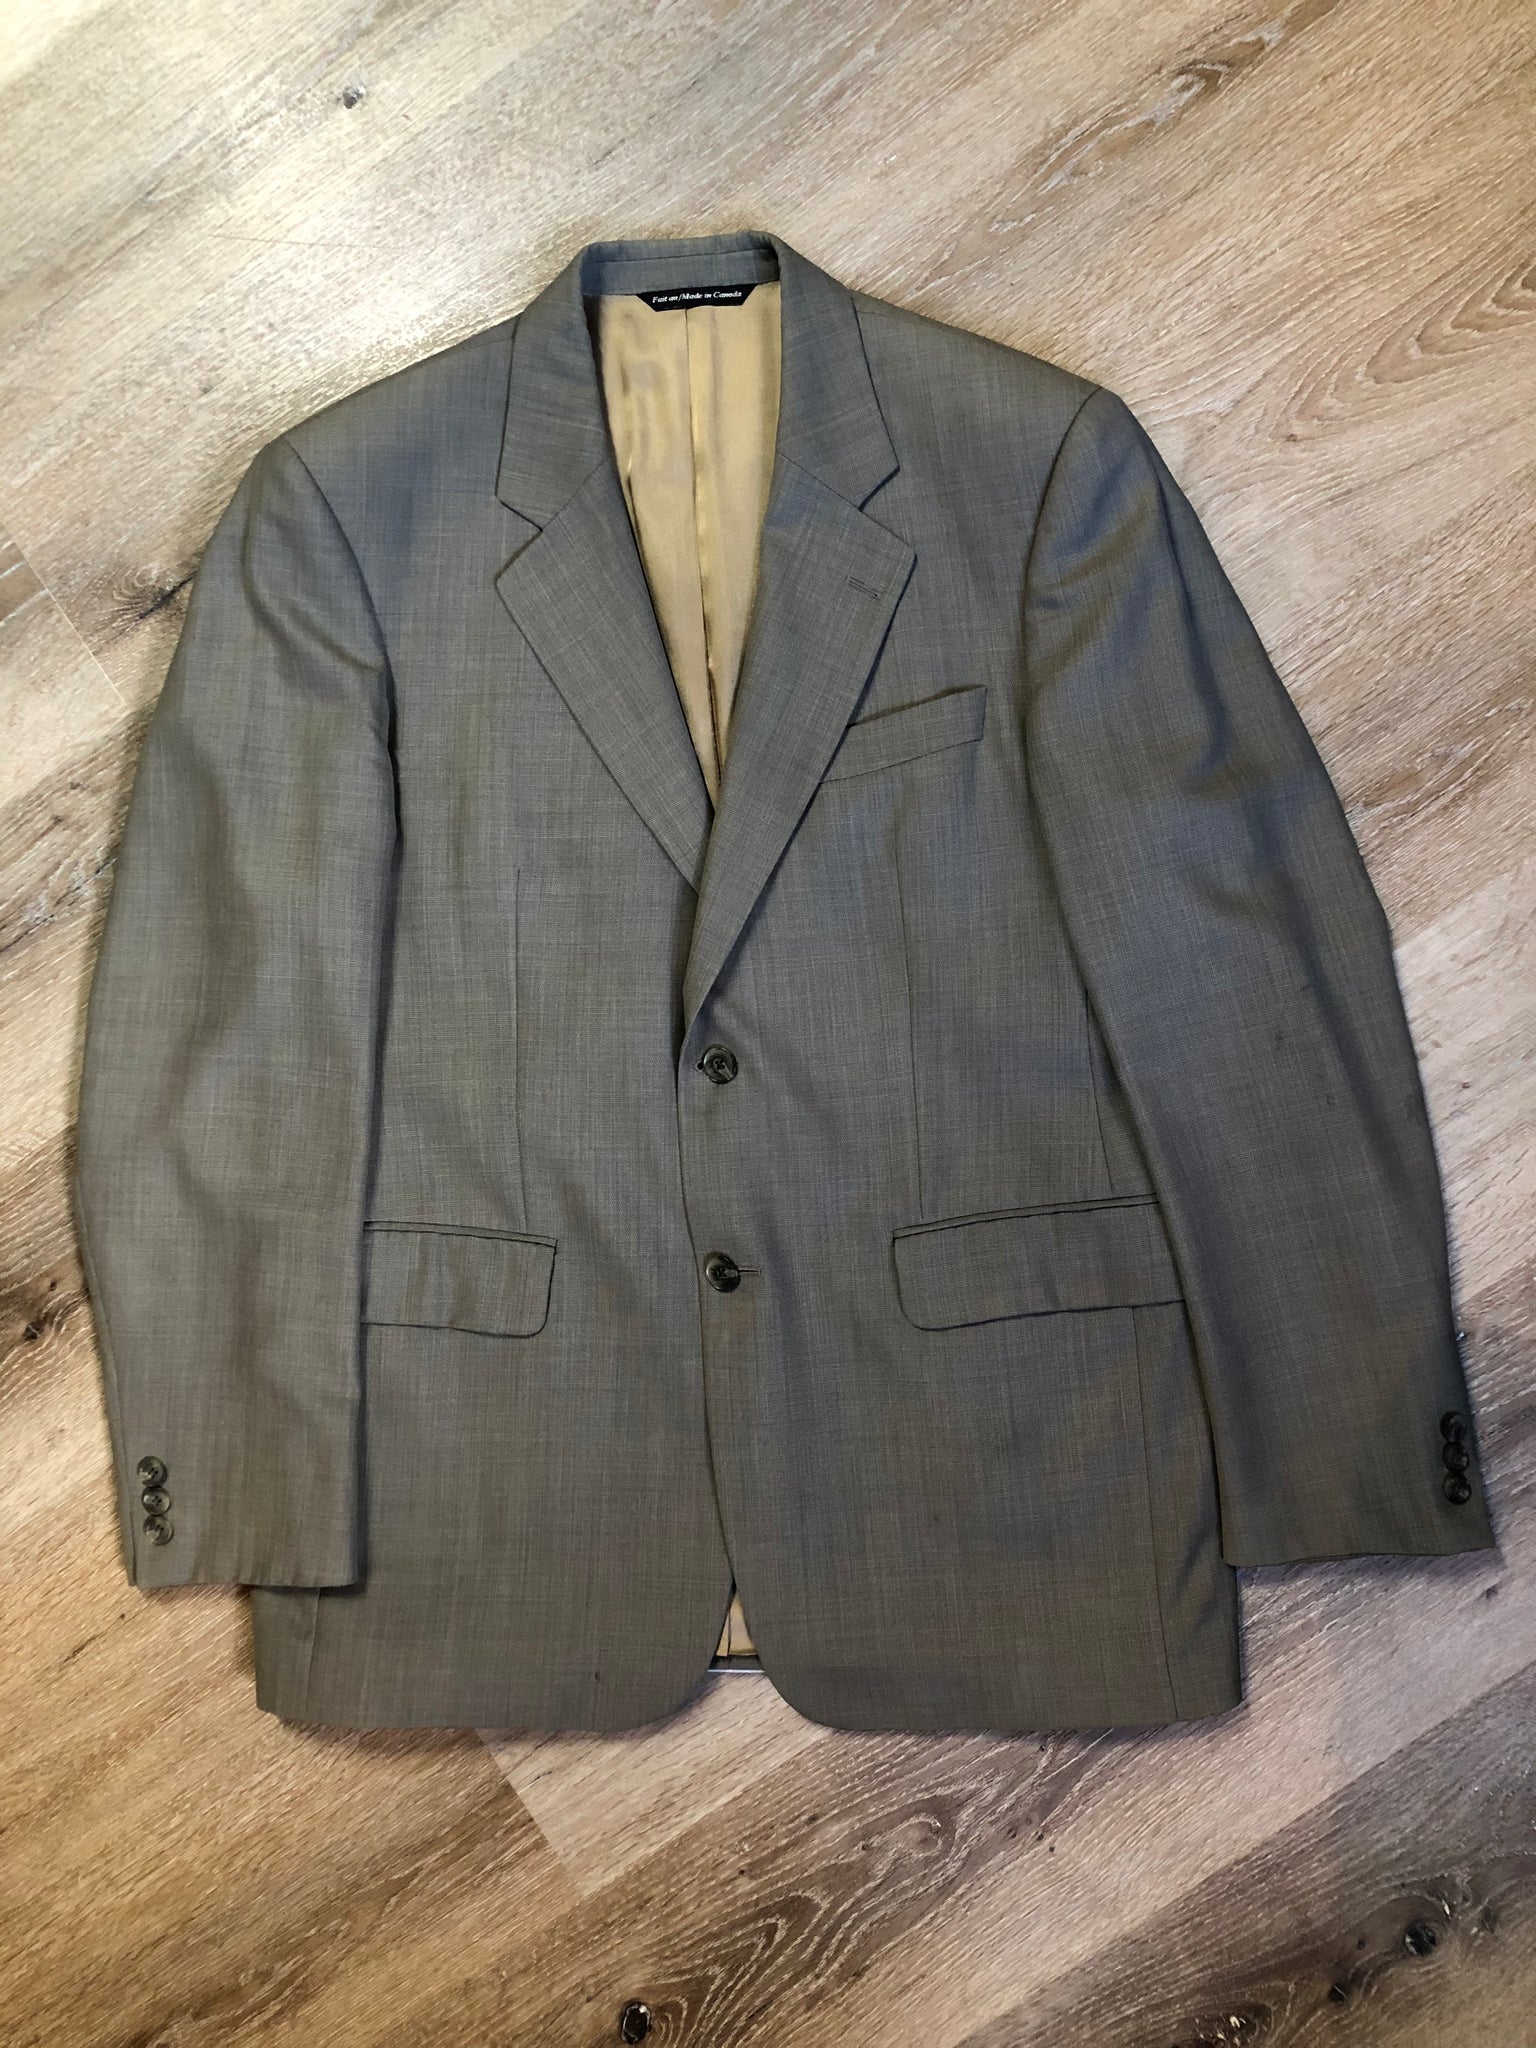 Vintage Shipley Studio Grey Suit jacket , Made in Canada – KingsPIER vintage